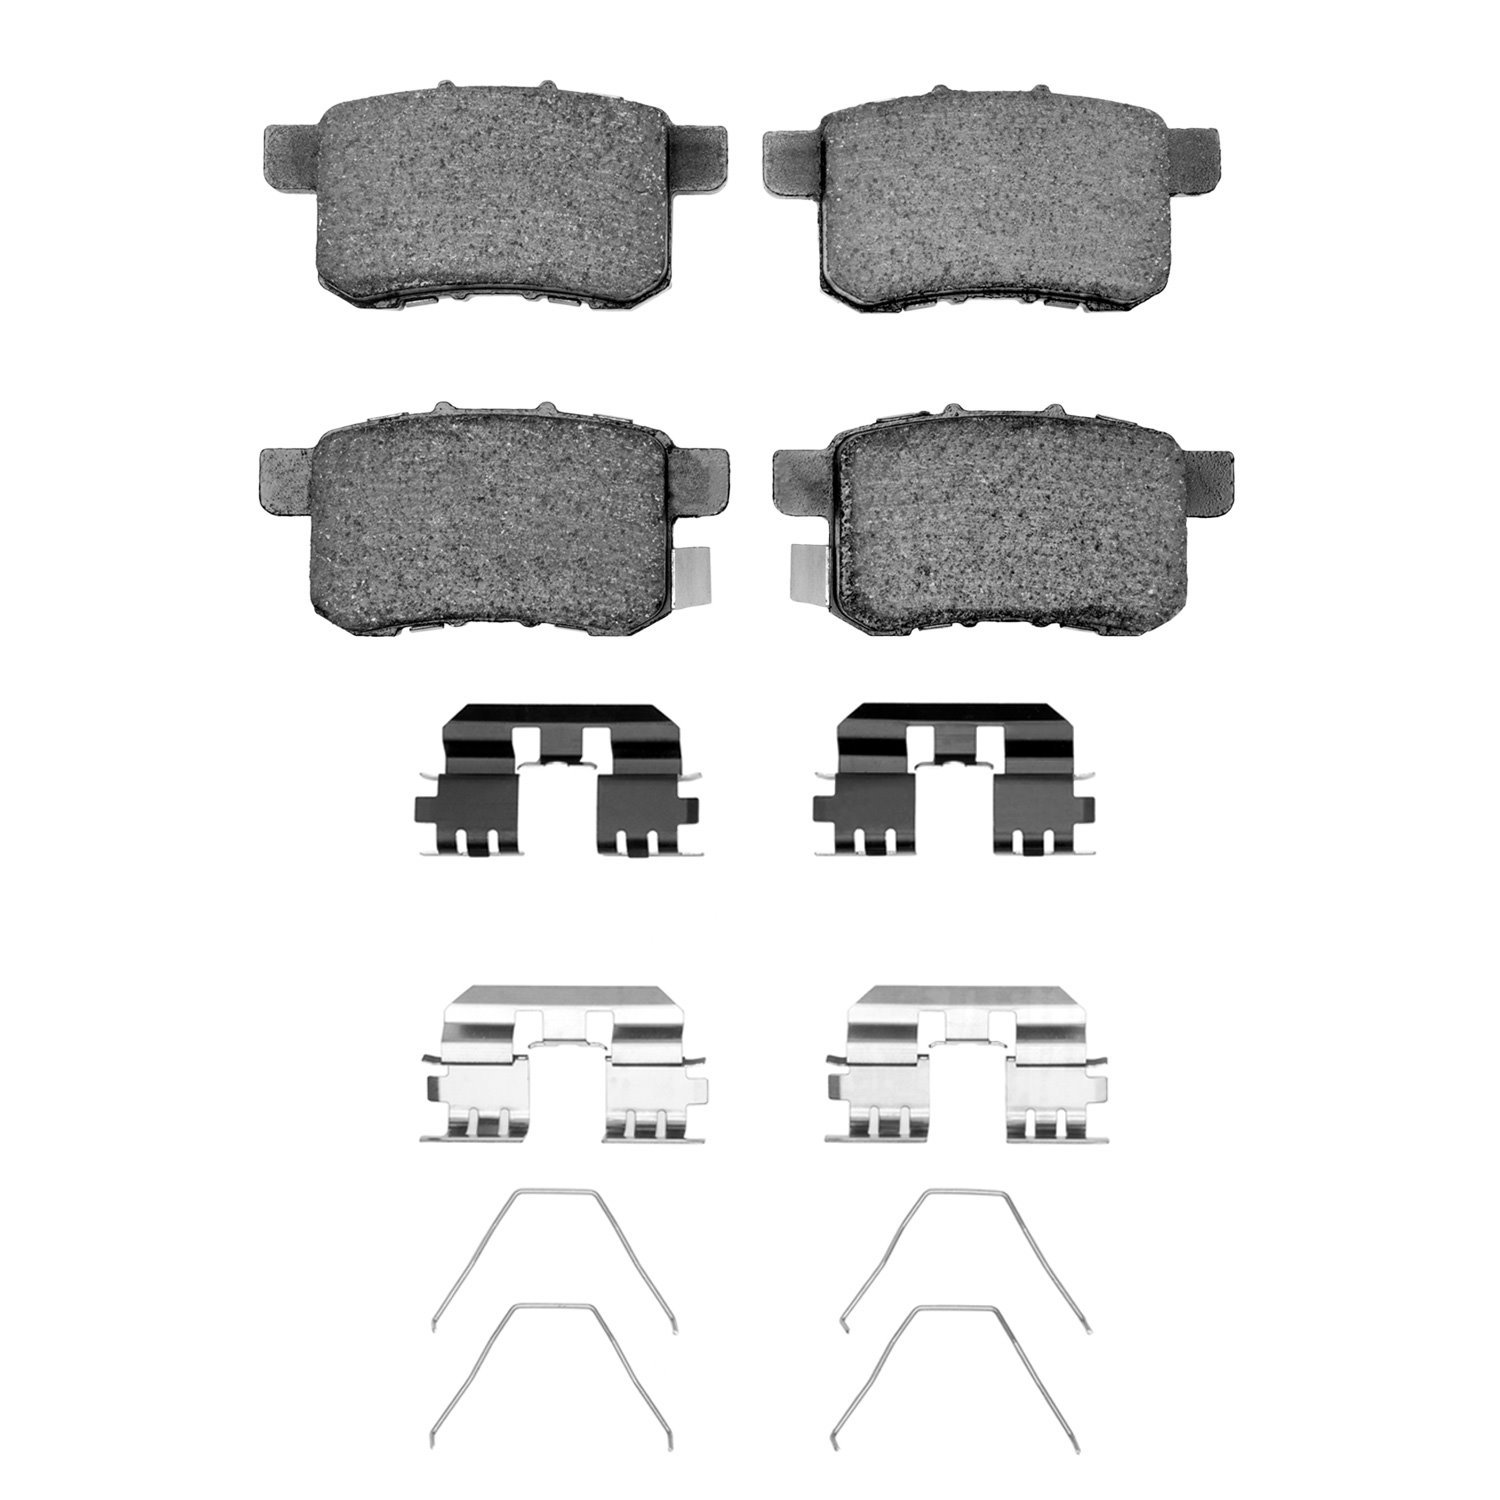 1310-1451-01 3000-Series Ceramic Brake Pads & Hardware Kit, 2008-2017 Acura/Honda, Position: Rear